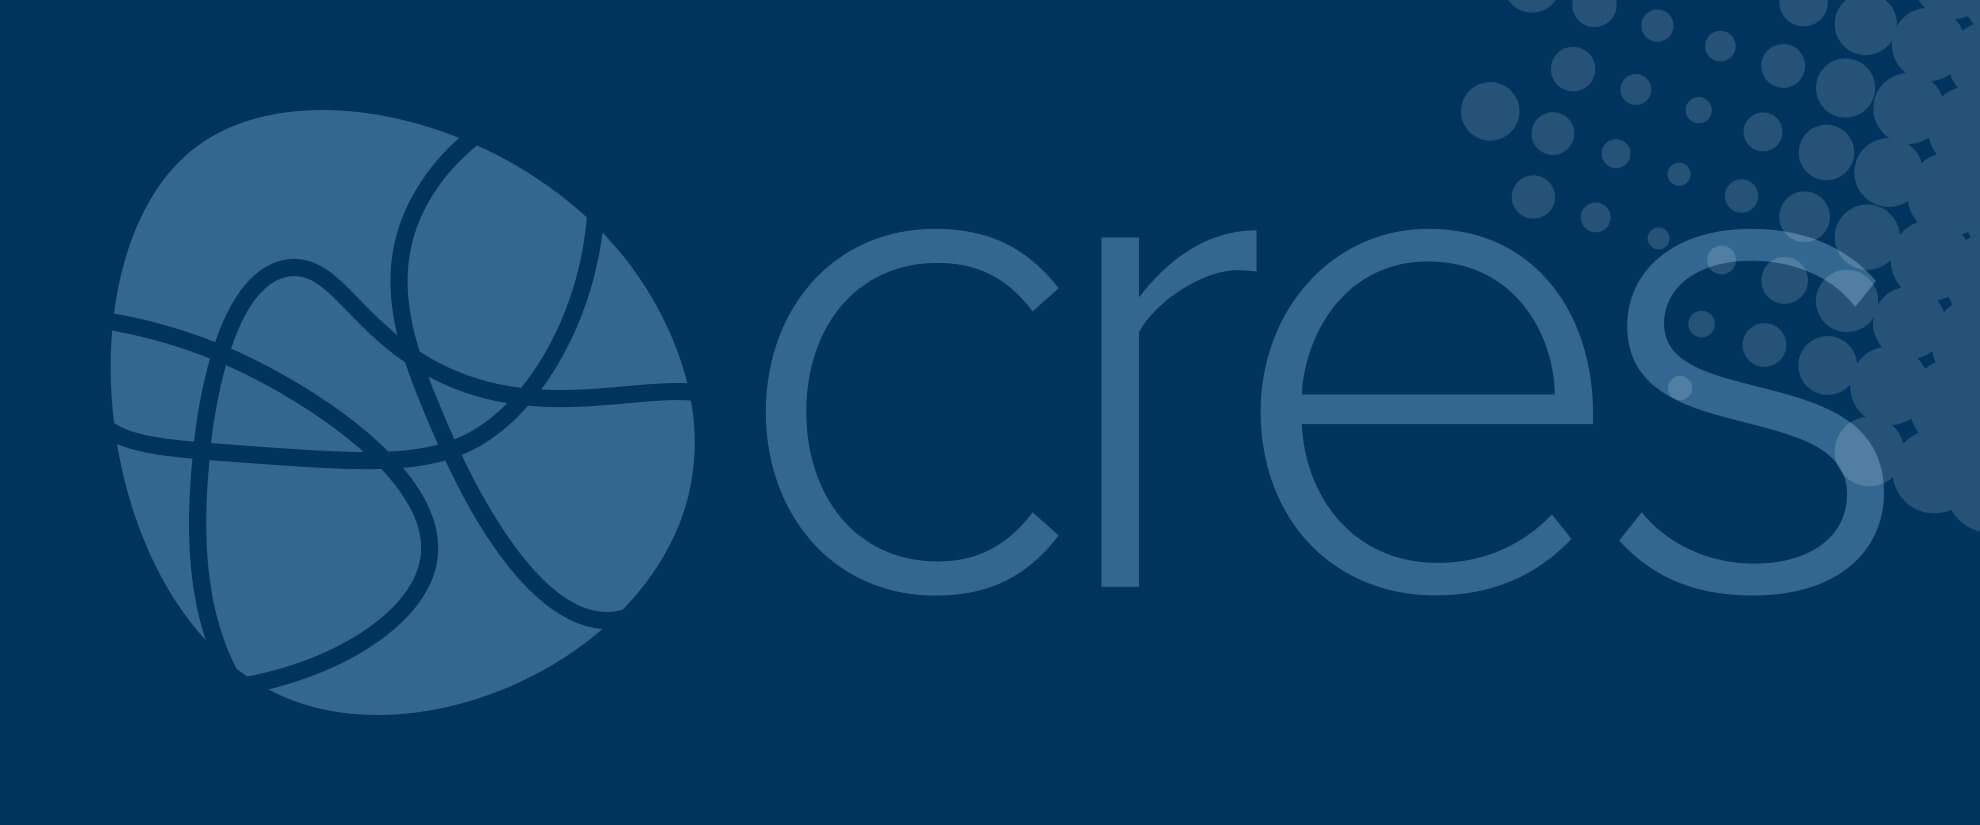 CRES logo on blue background